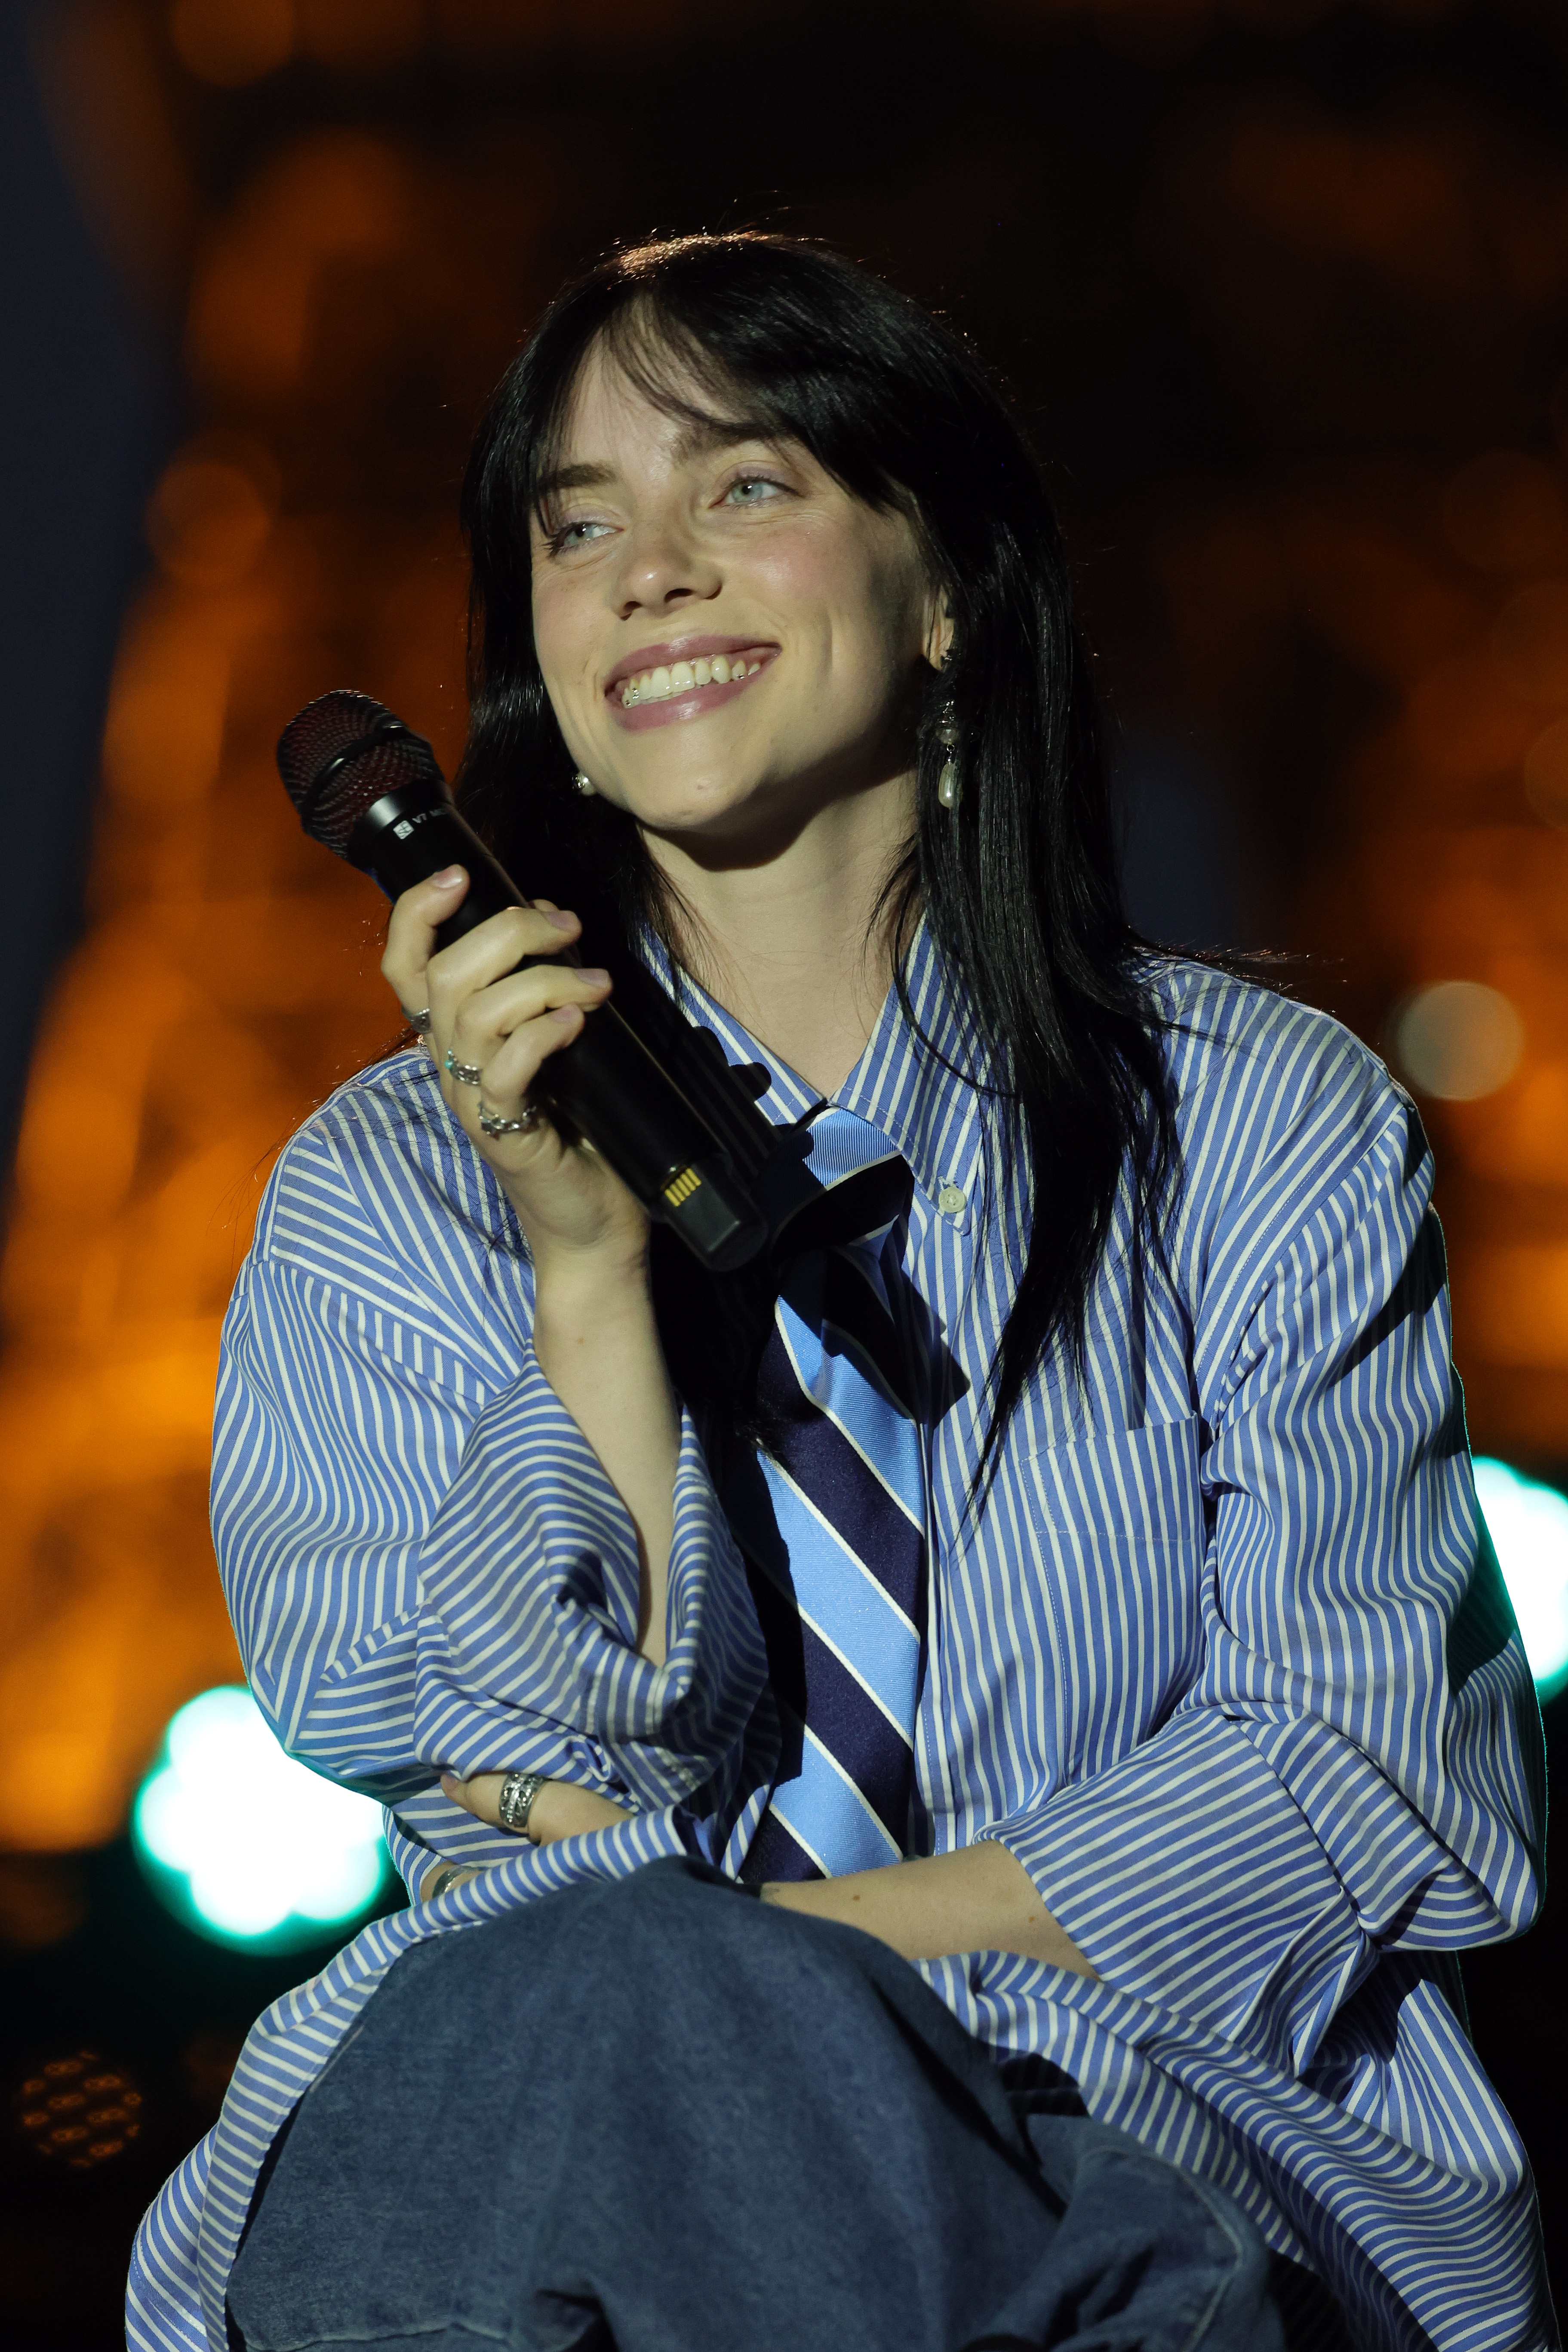 Closeup of Billie Eilish holding a microphone